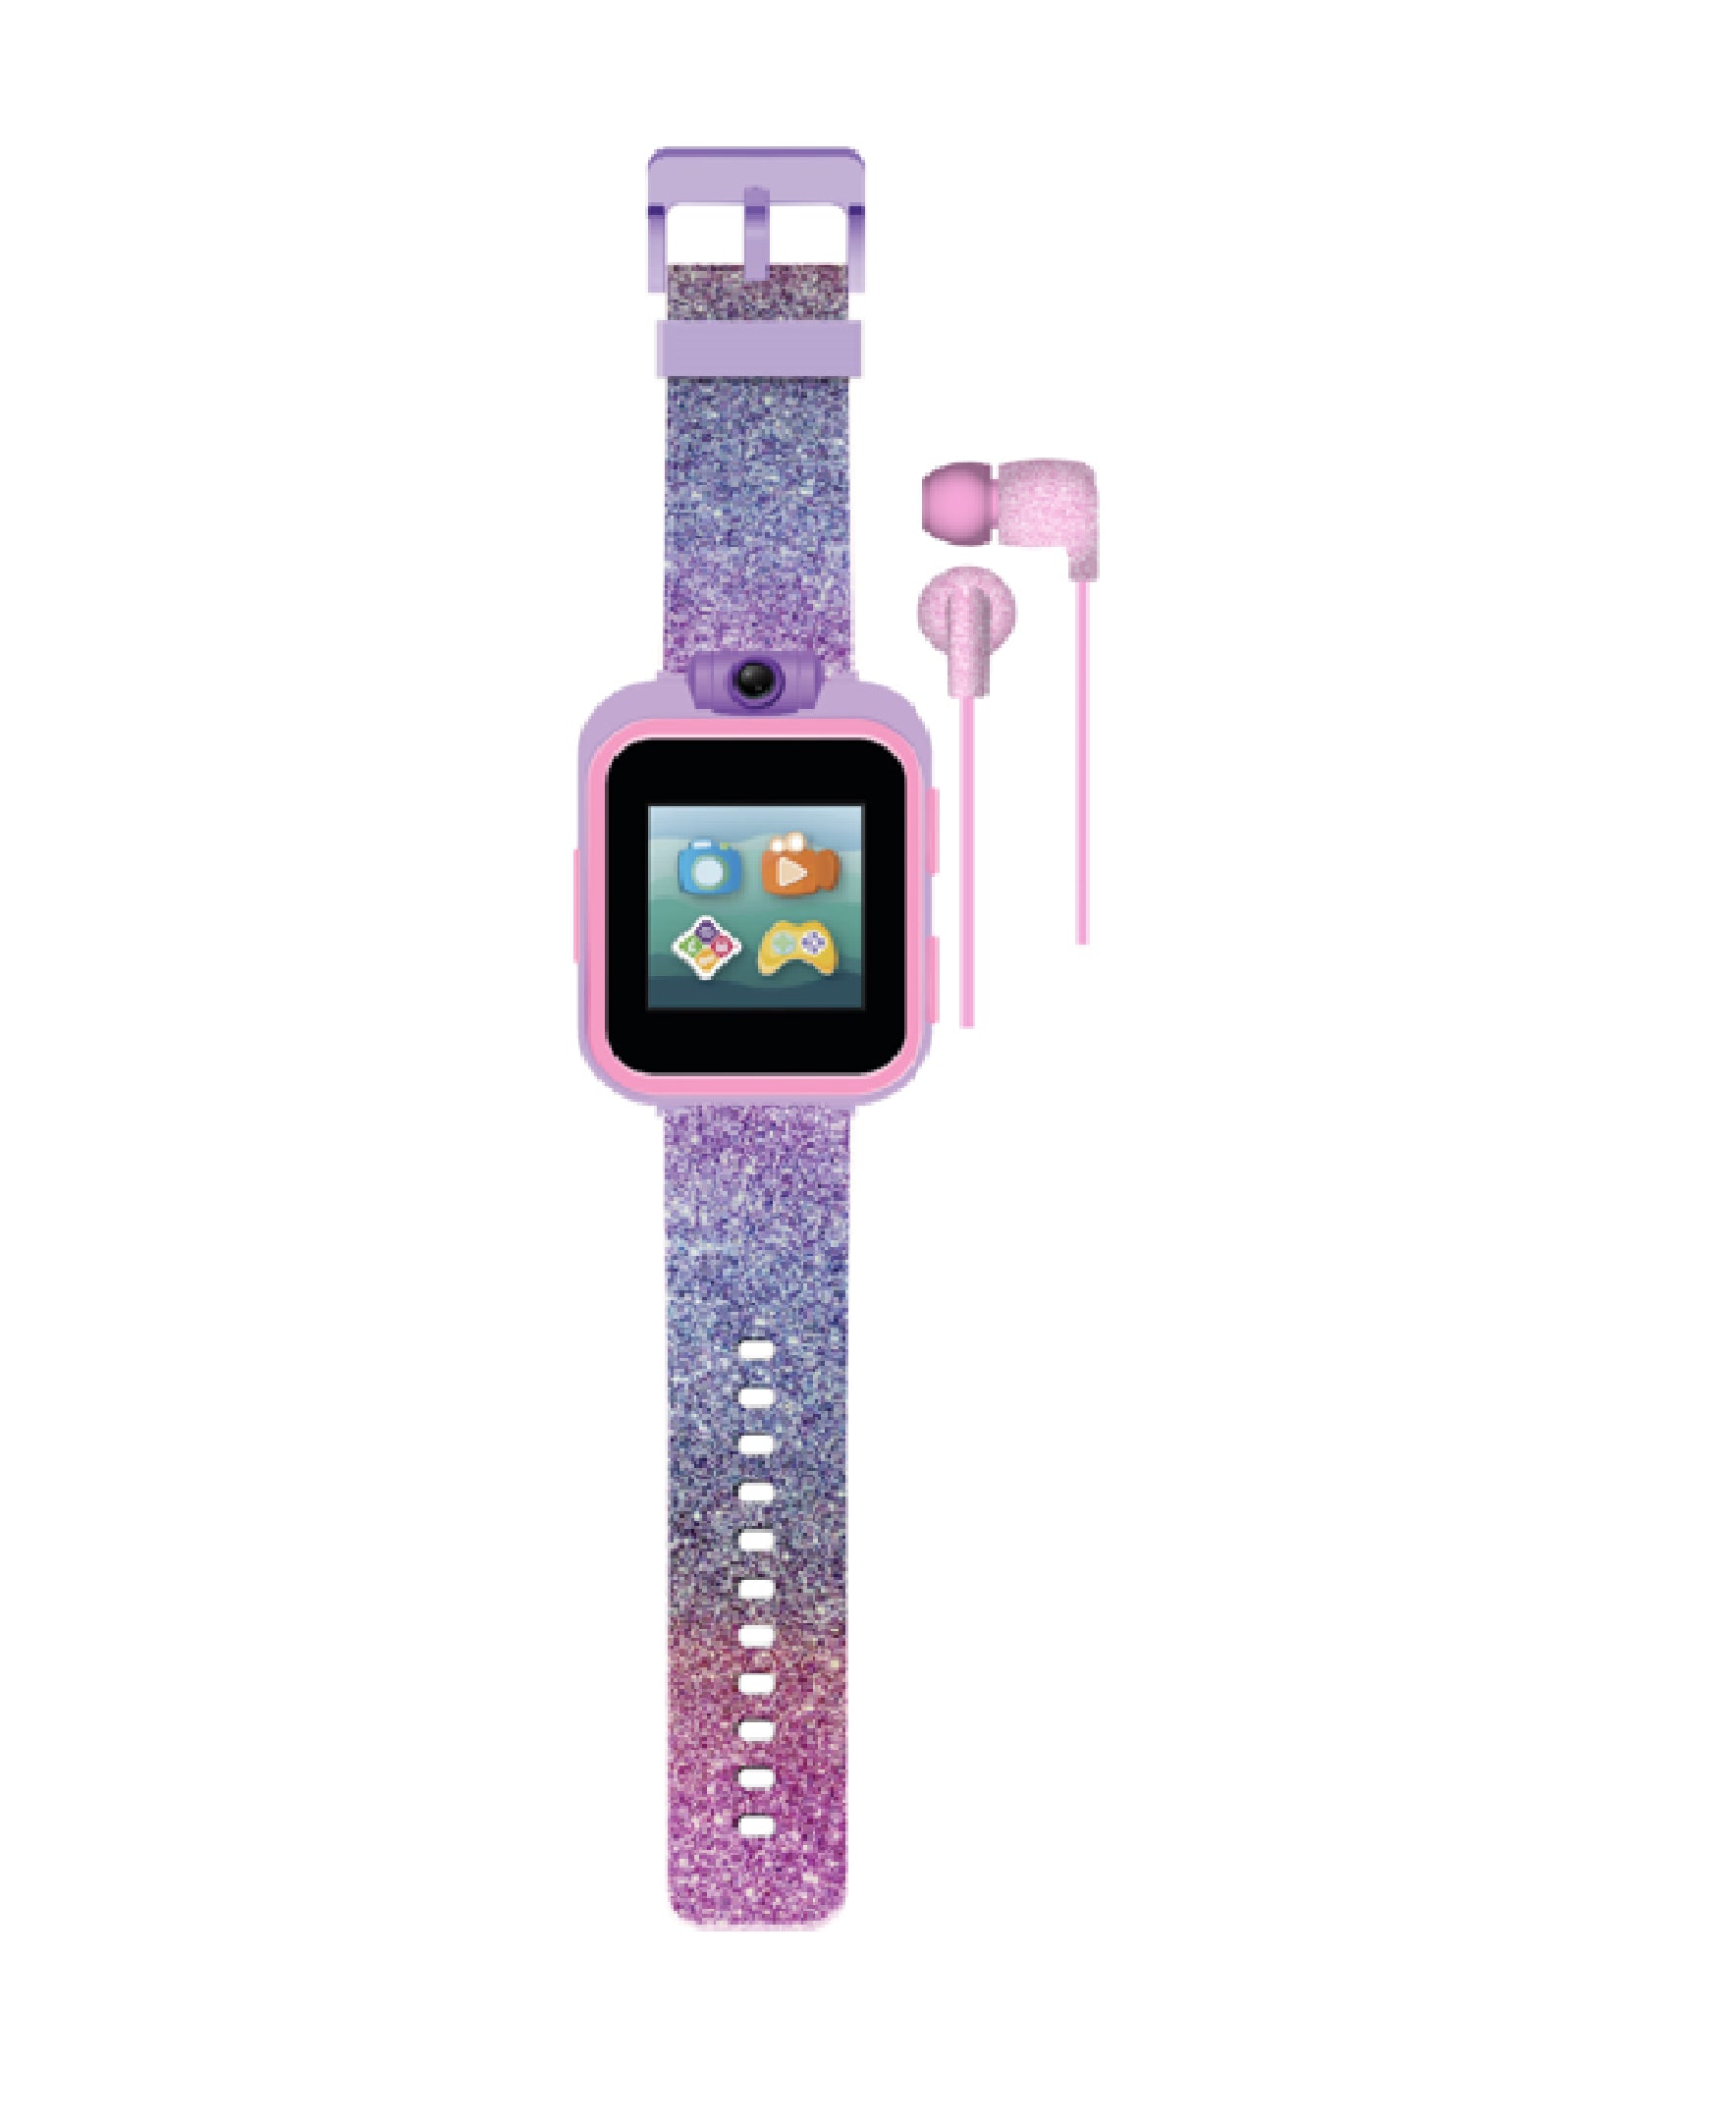 Playzoom Kids Smartwatch & Earbuds Set: Purple Gradient Glitter